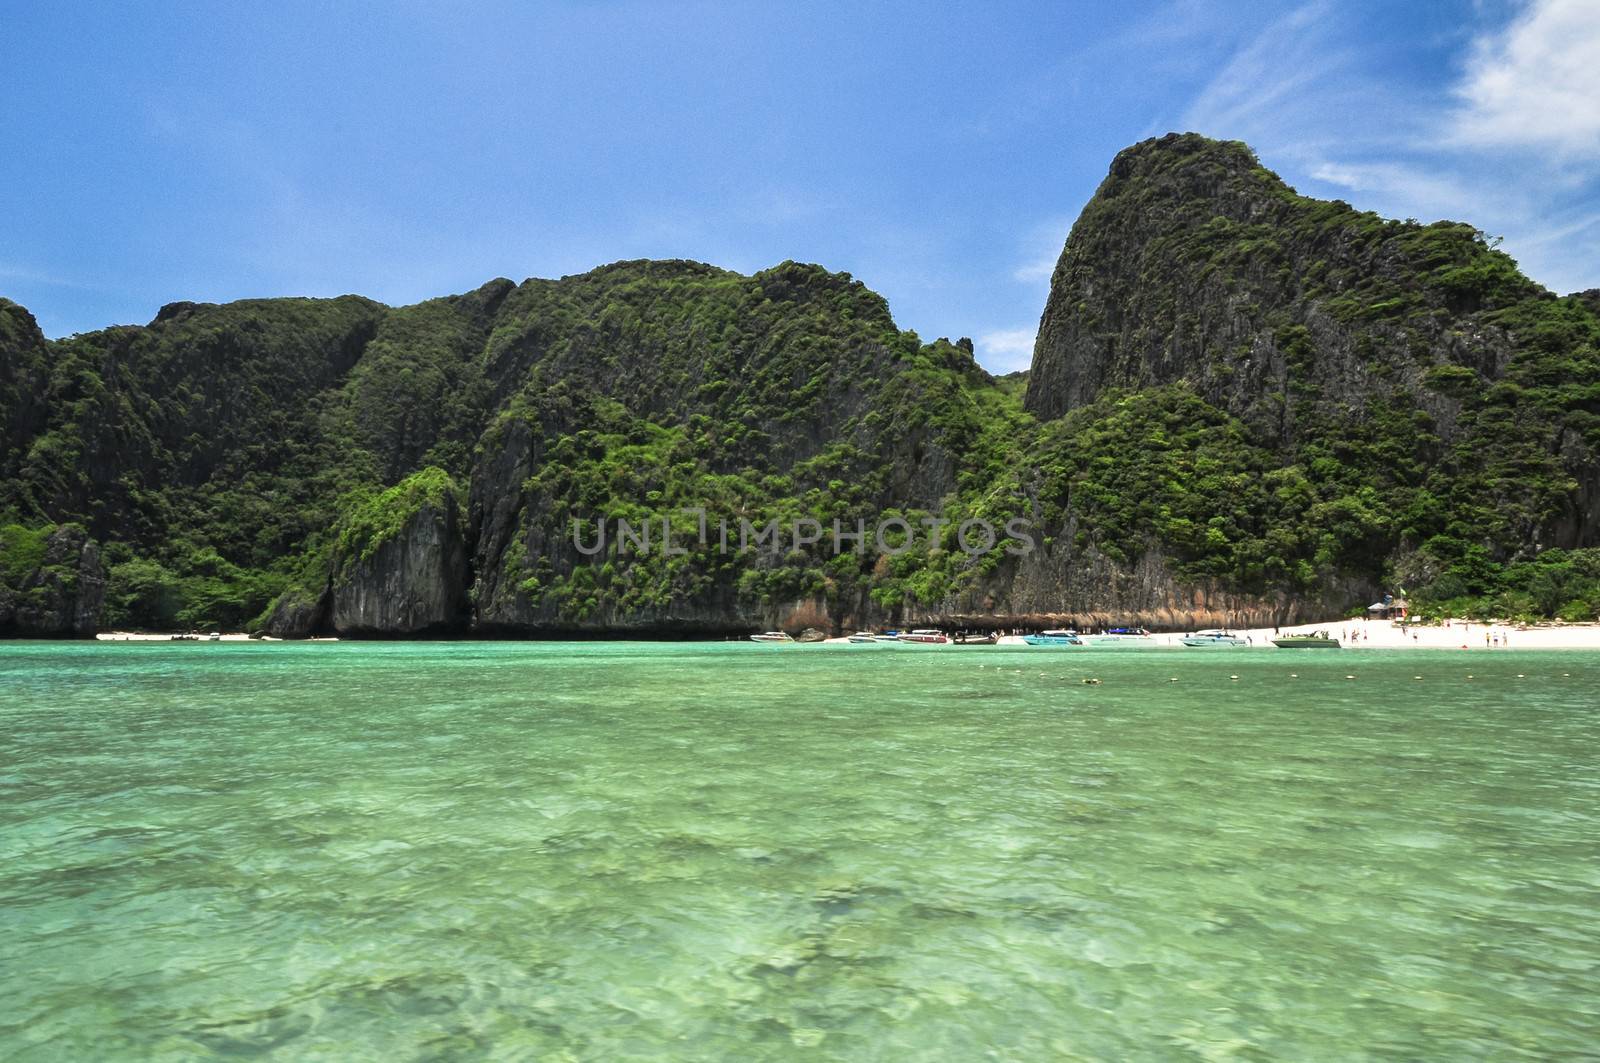 View of Maya Bay, Phi Phi island, Thailand by weltreisendertj